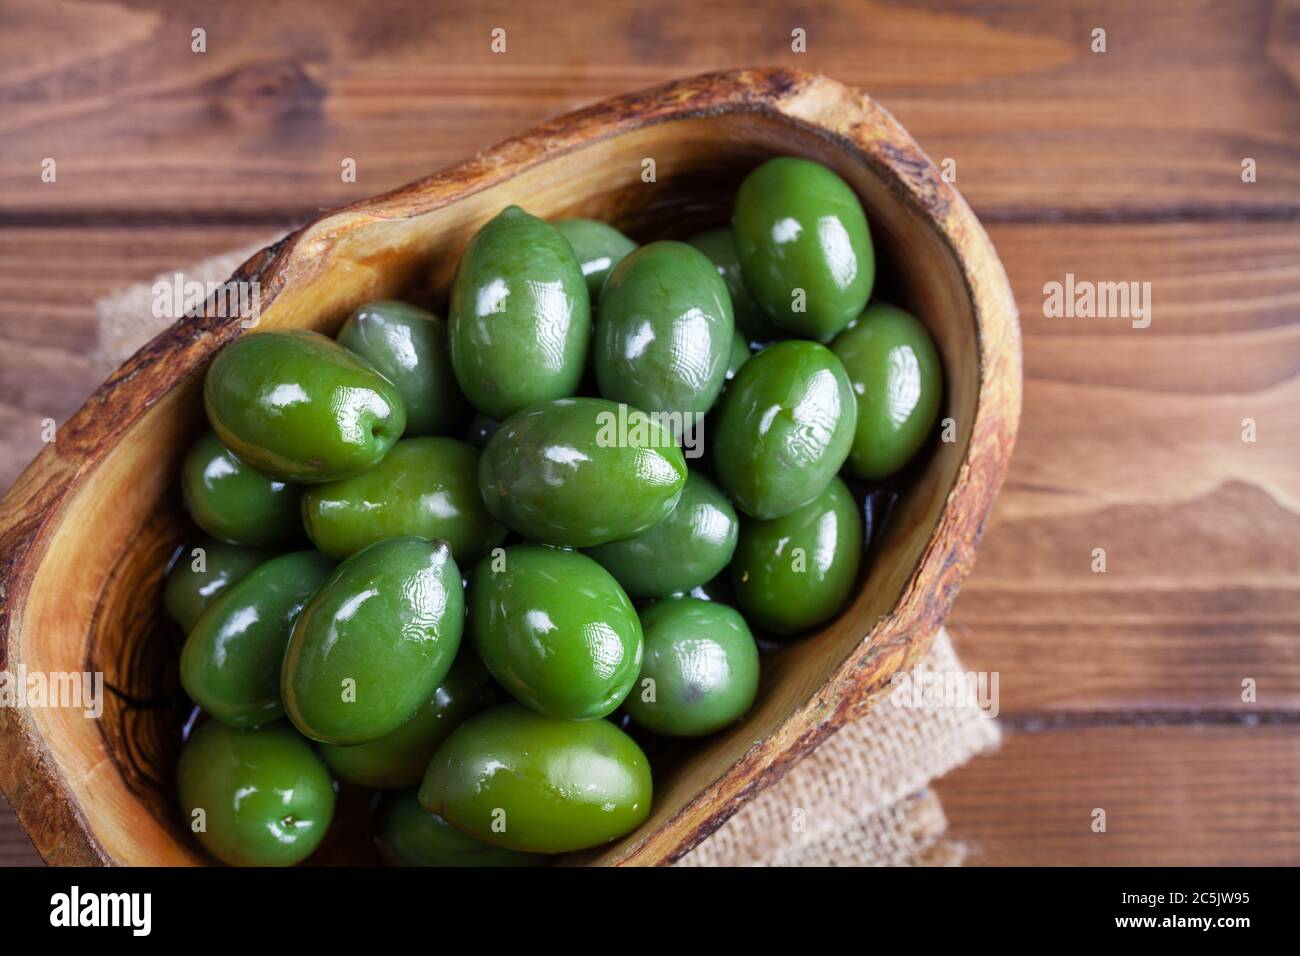 - Alamy aus cerignola Stockfotografie di Itally grüne Oliven Apulien, Bella